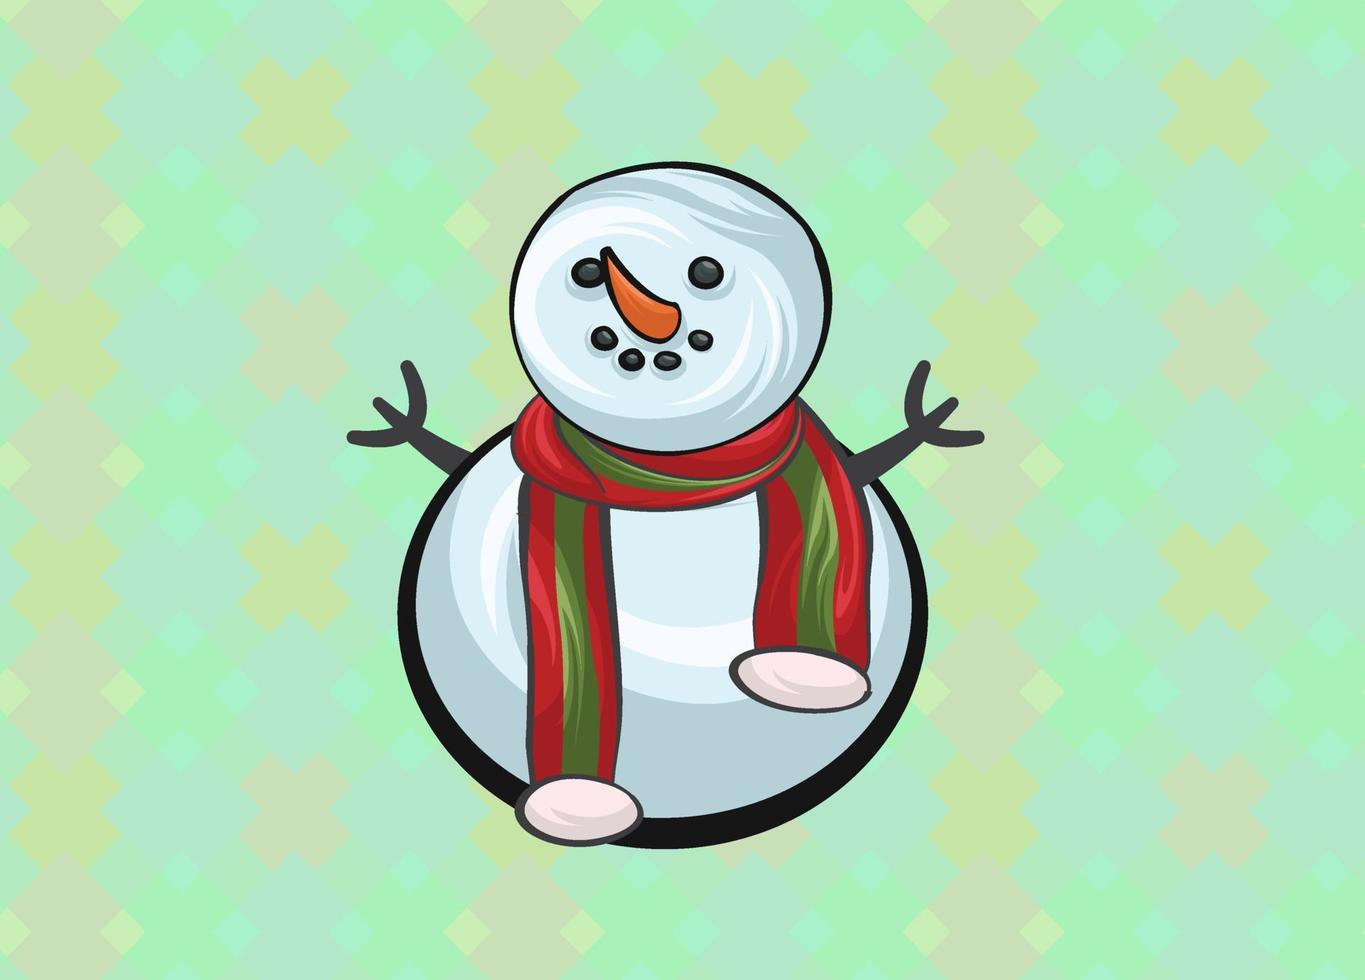 Christmas Cute Little Cheerful Snowman with Red Santas Cap. Christmas cute cartoon character. vector